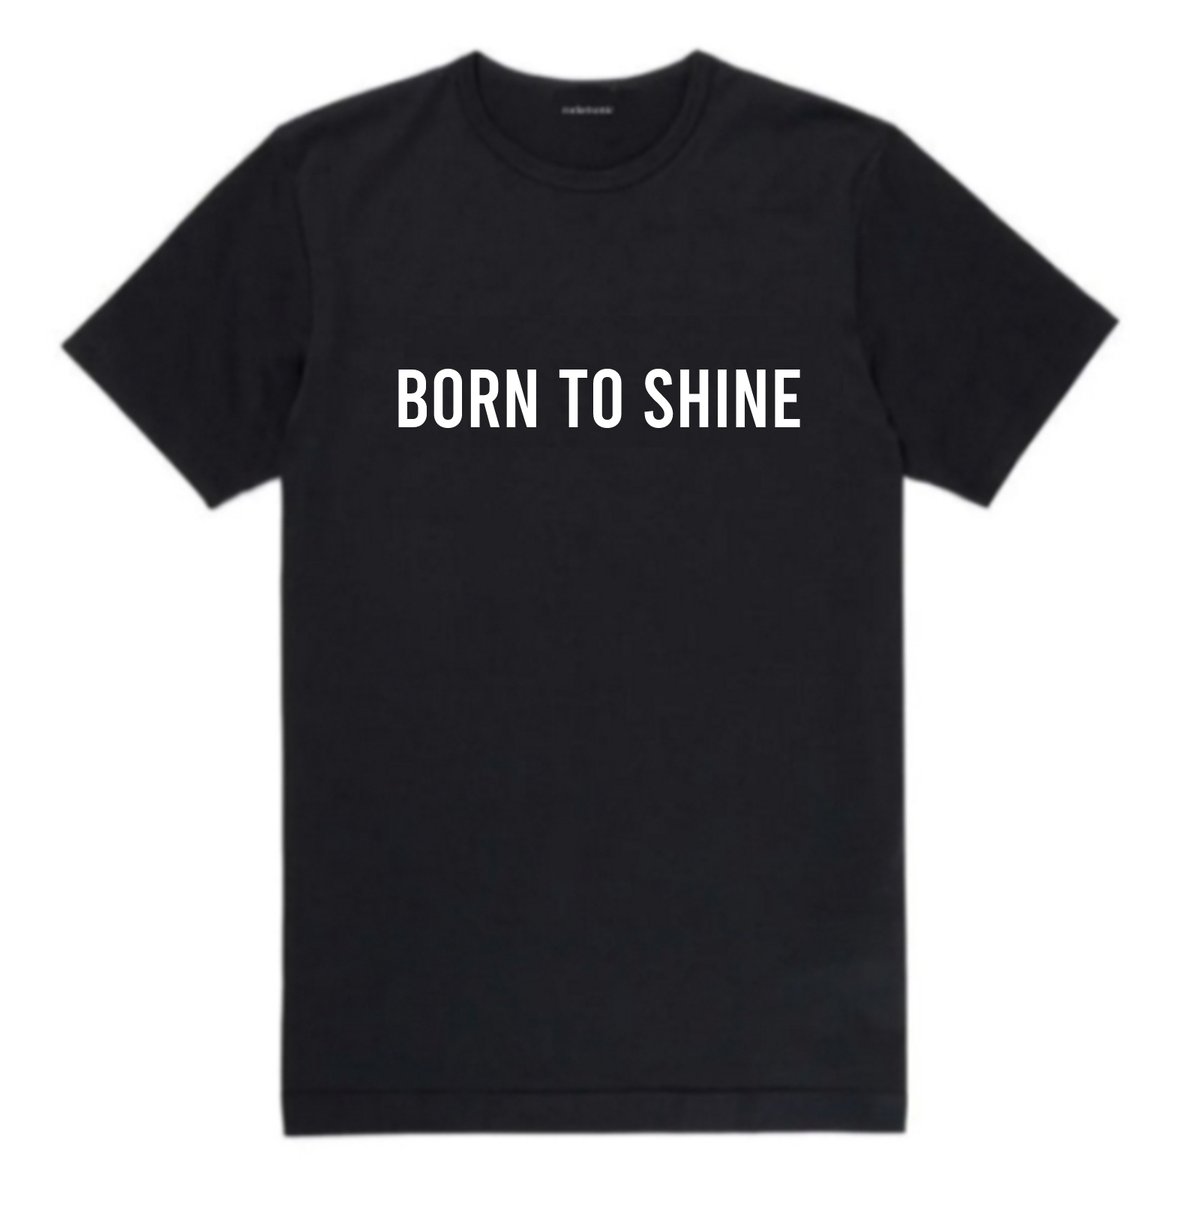 Image of ‘Born to Shine' Slogan Black Tee